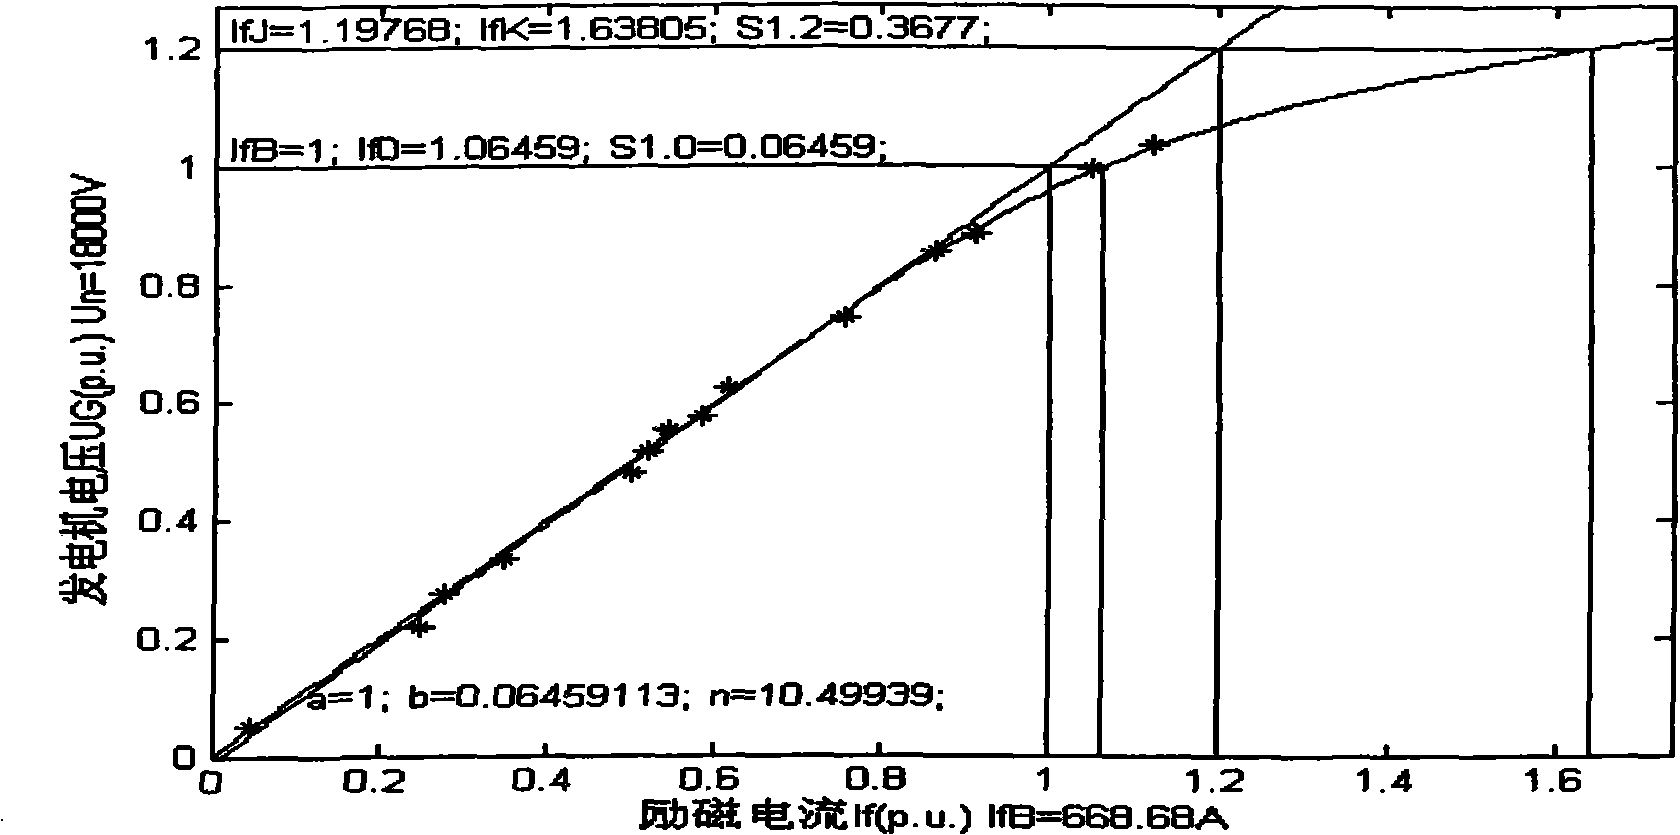 Modeling method of generator excitation system